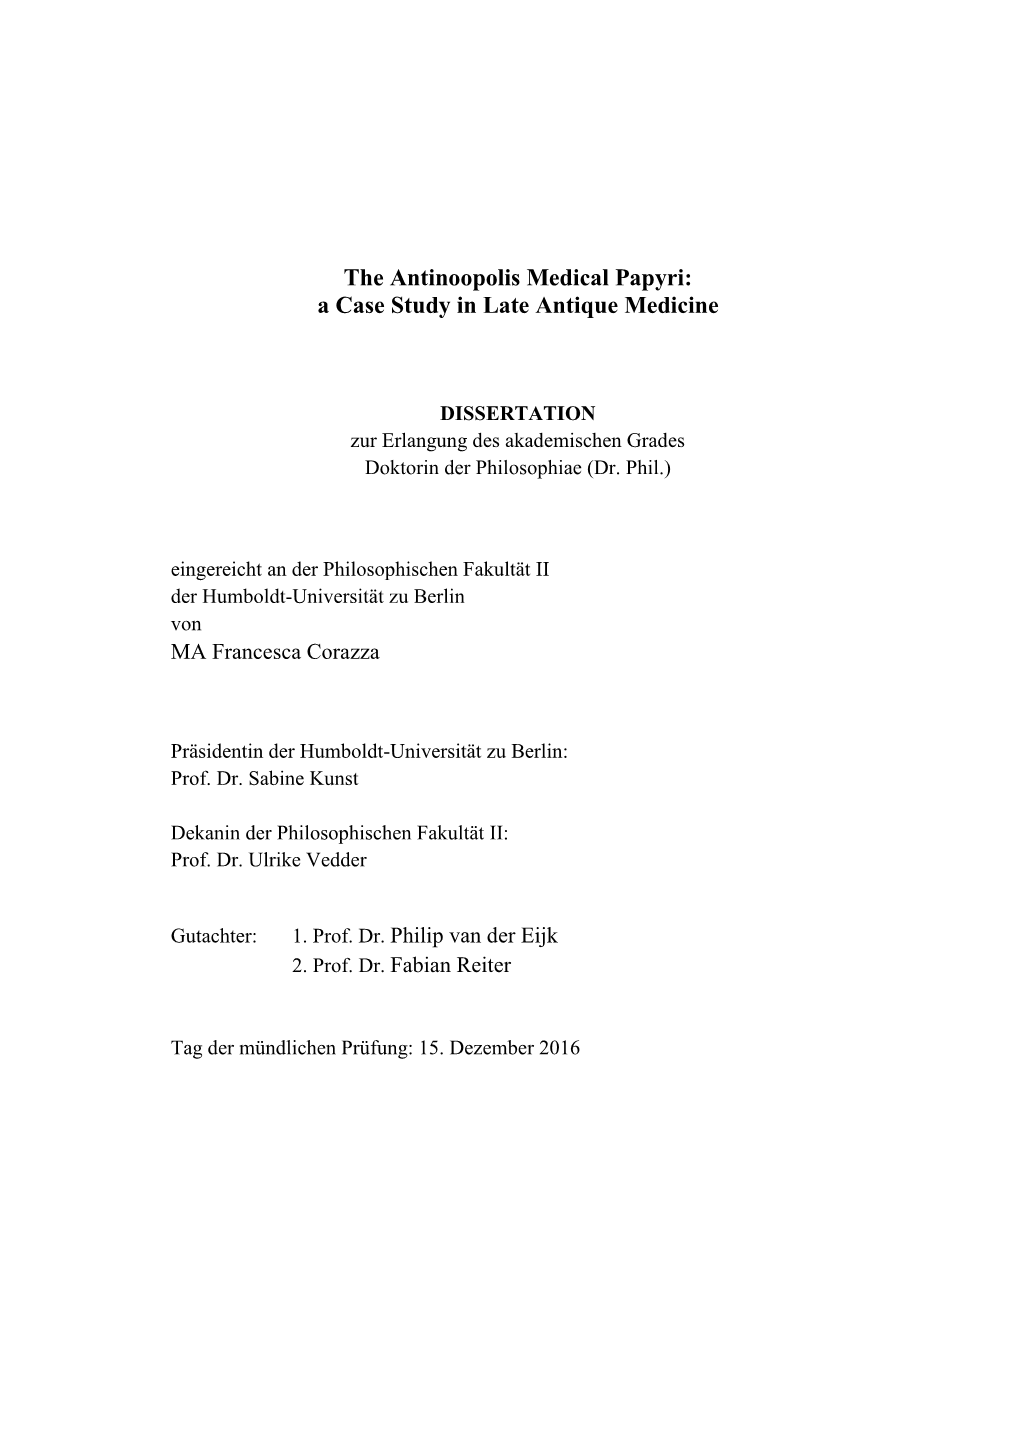 The Antinoopolis Medical Papyri: a Case Study in Late Antique Medicine